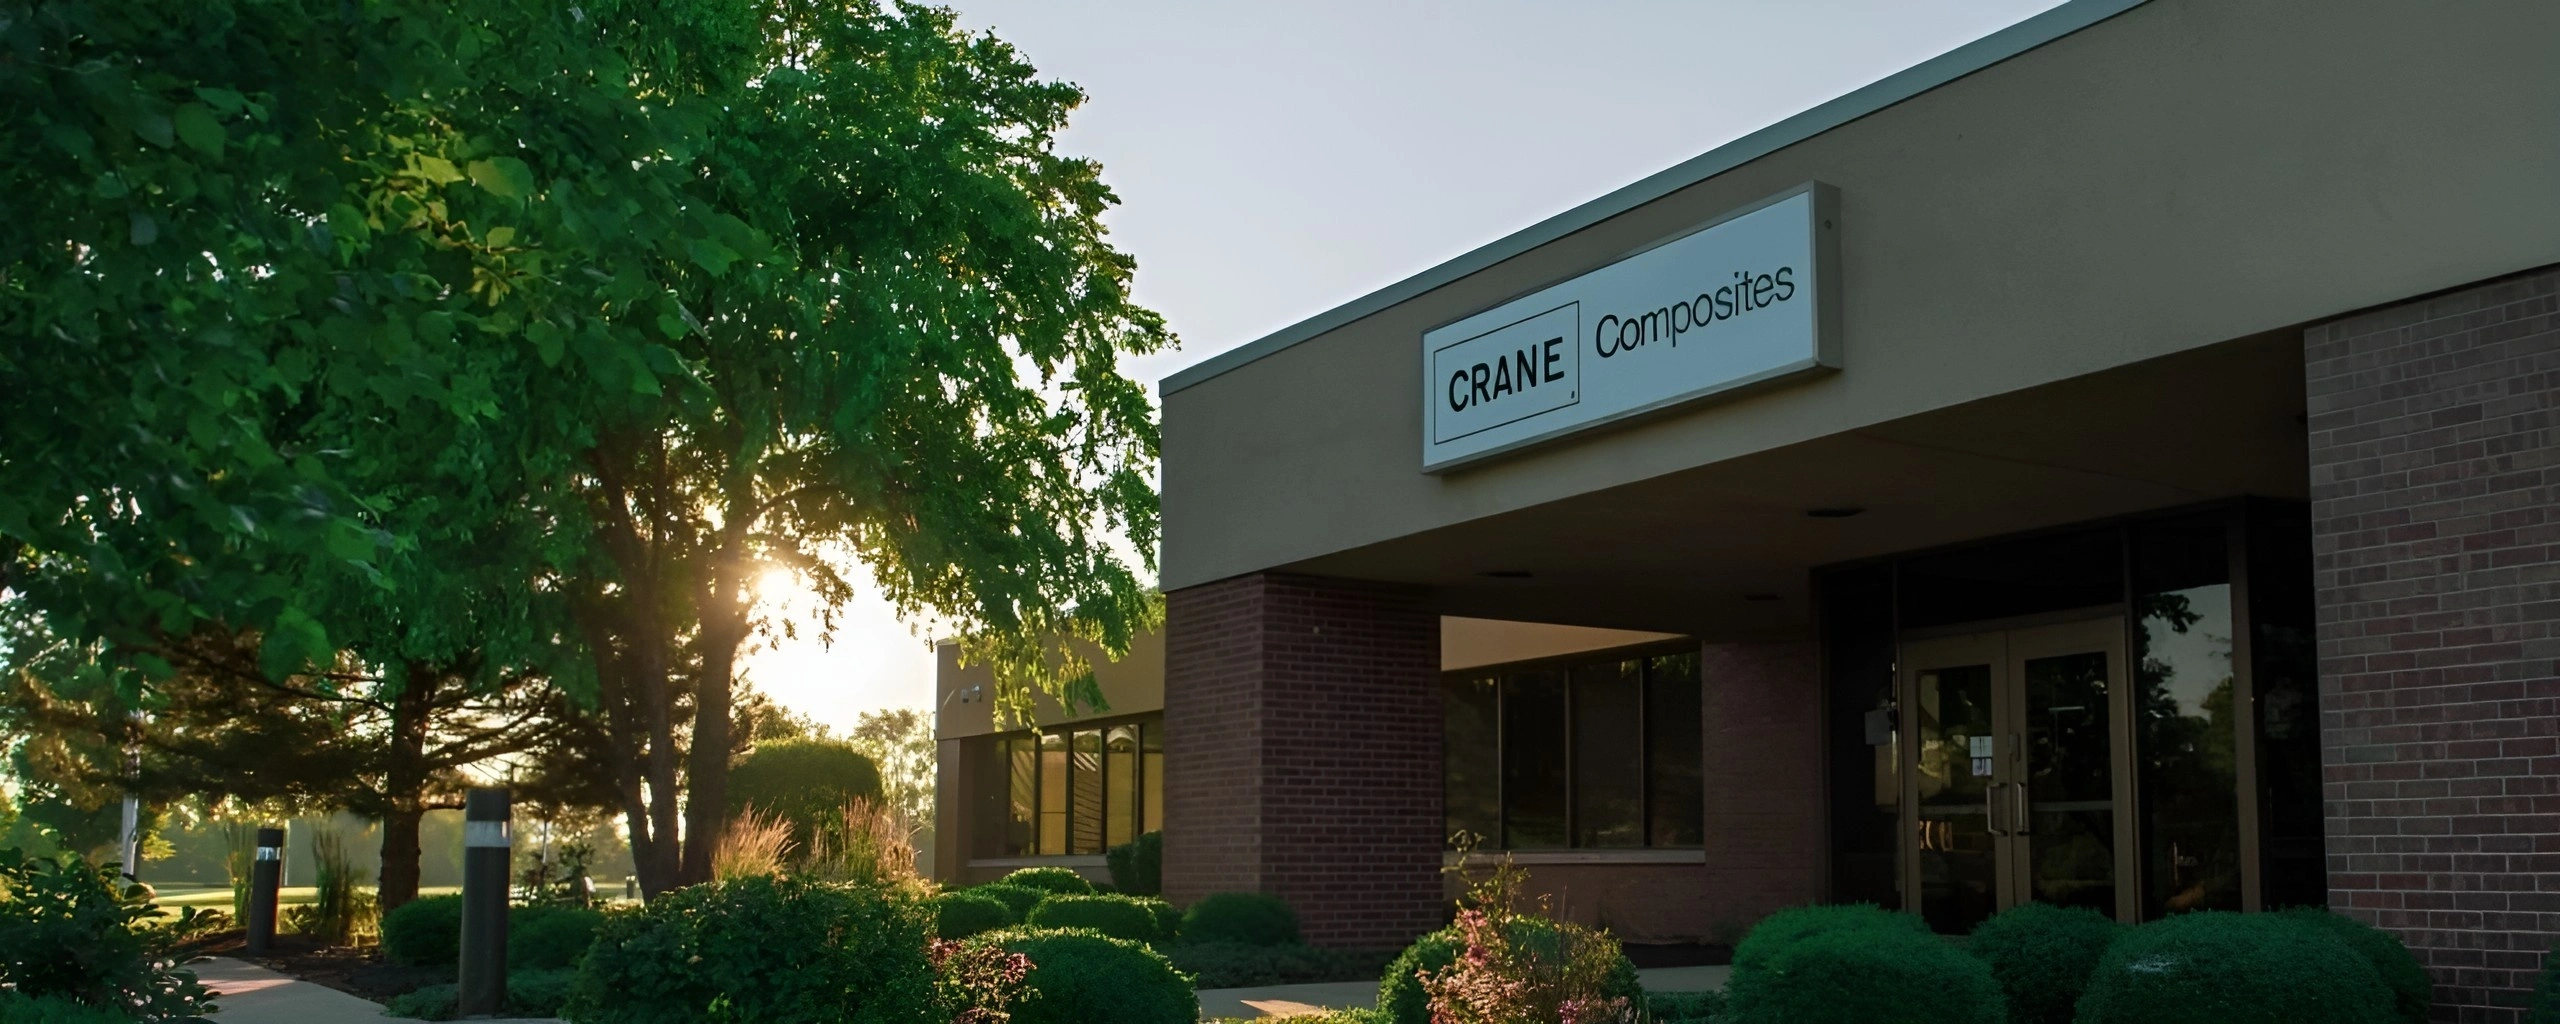 Crane Composites-vishalsurgical.co.in